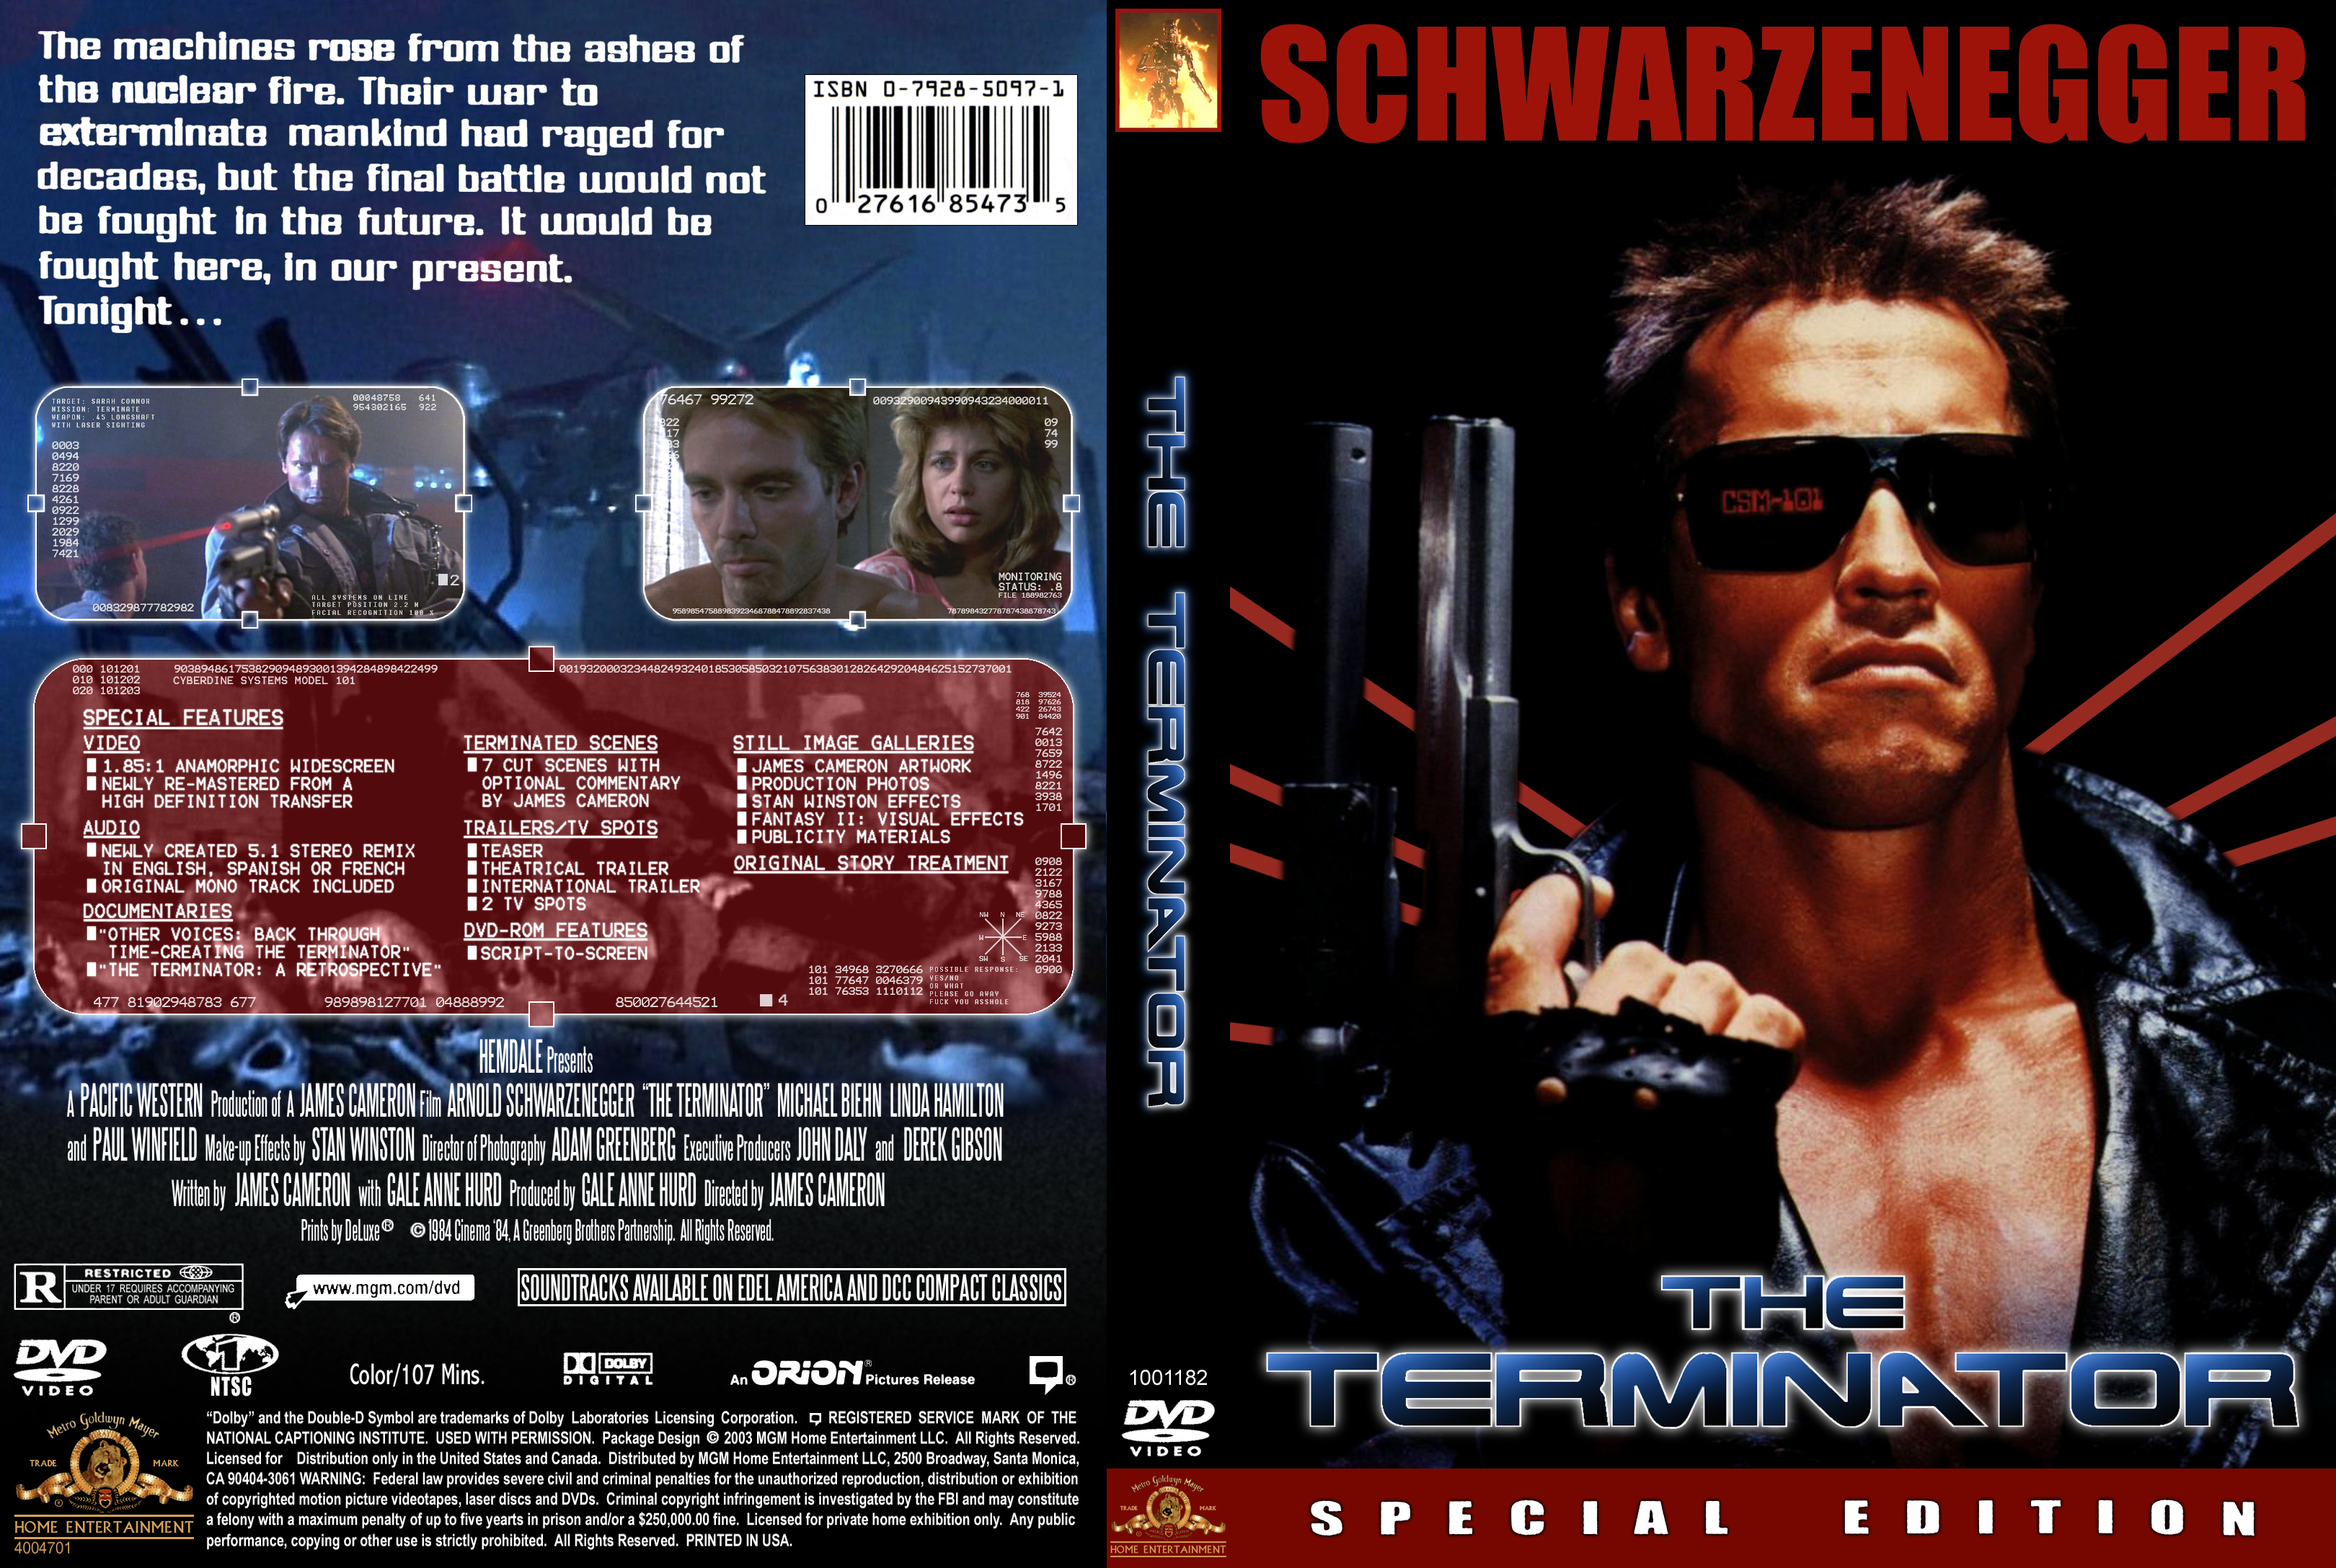 Ost terminator. Терминатор the Terminator 1984. The Terminator 1984 DVD Cover. Терминатор 1984 диск дивиди. Двд диск Терминатор 2 3 коллекция.